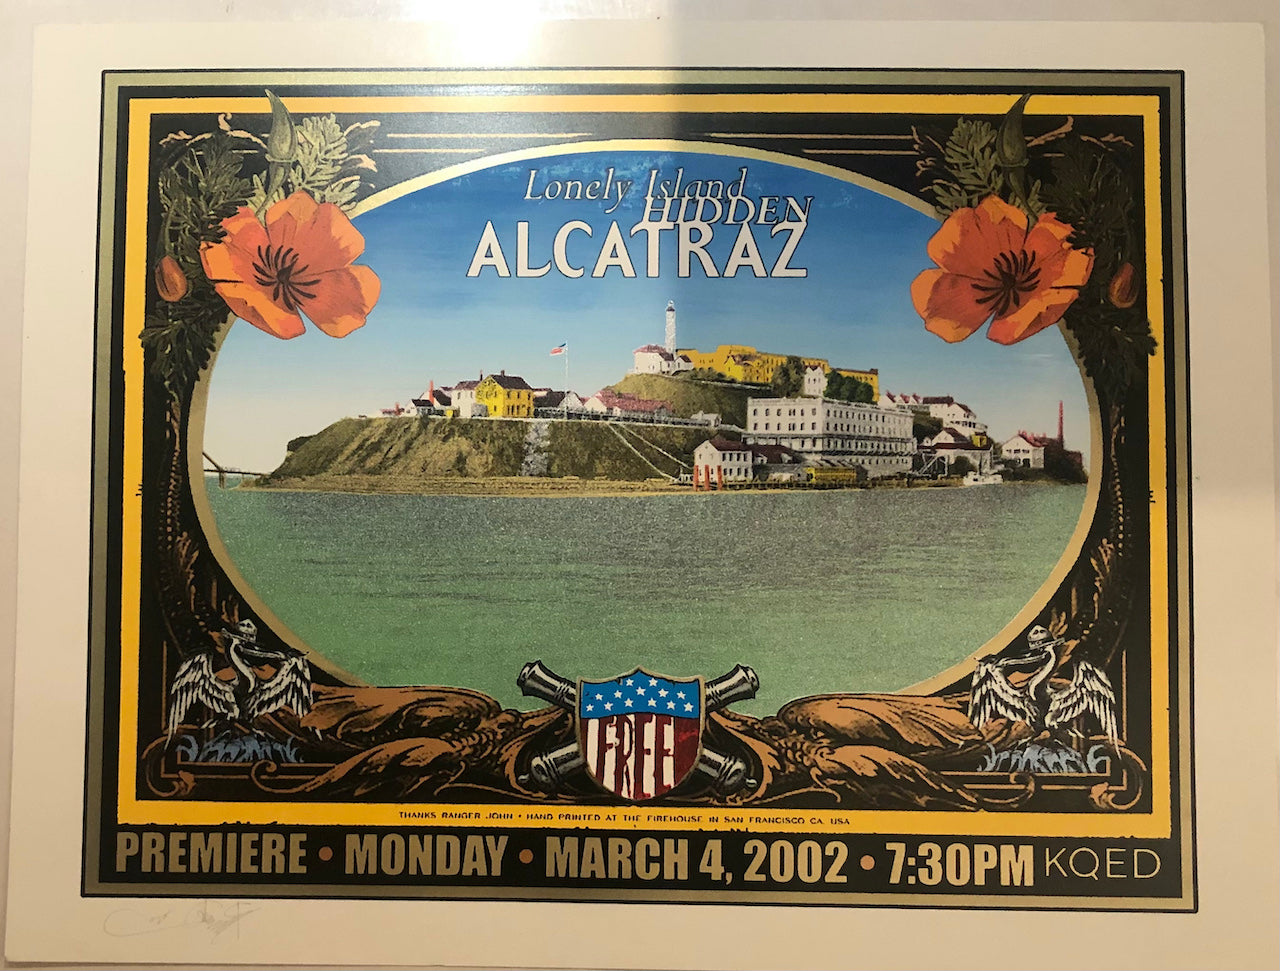 ALCATRAZ - LONELY ISLAND HIDDEN